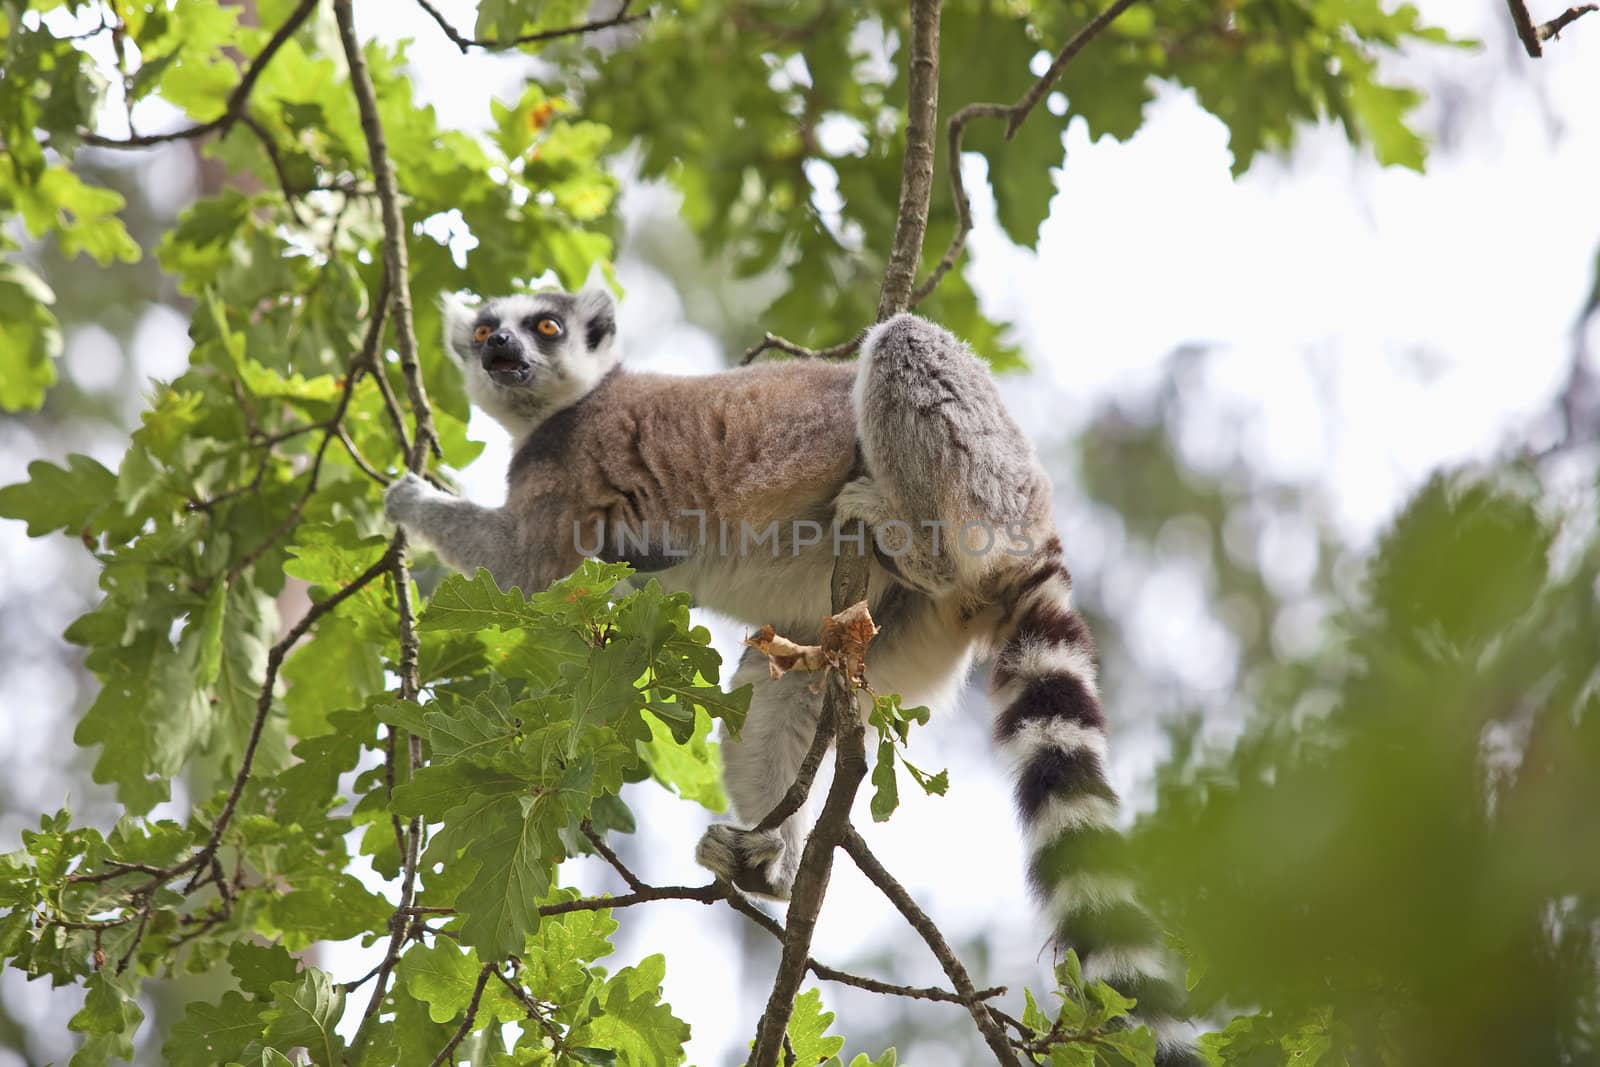 Lemur by kjorgen